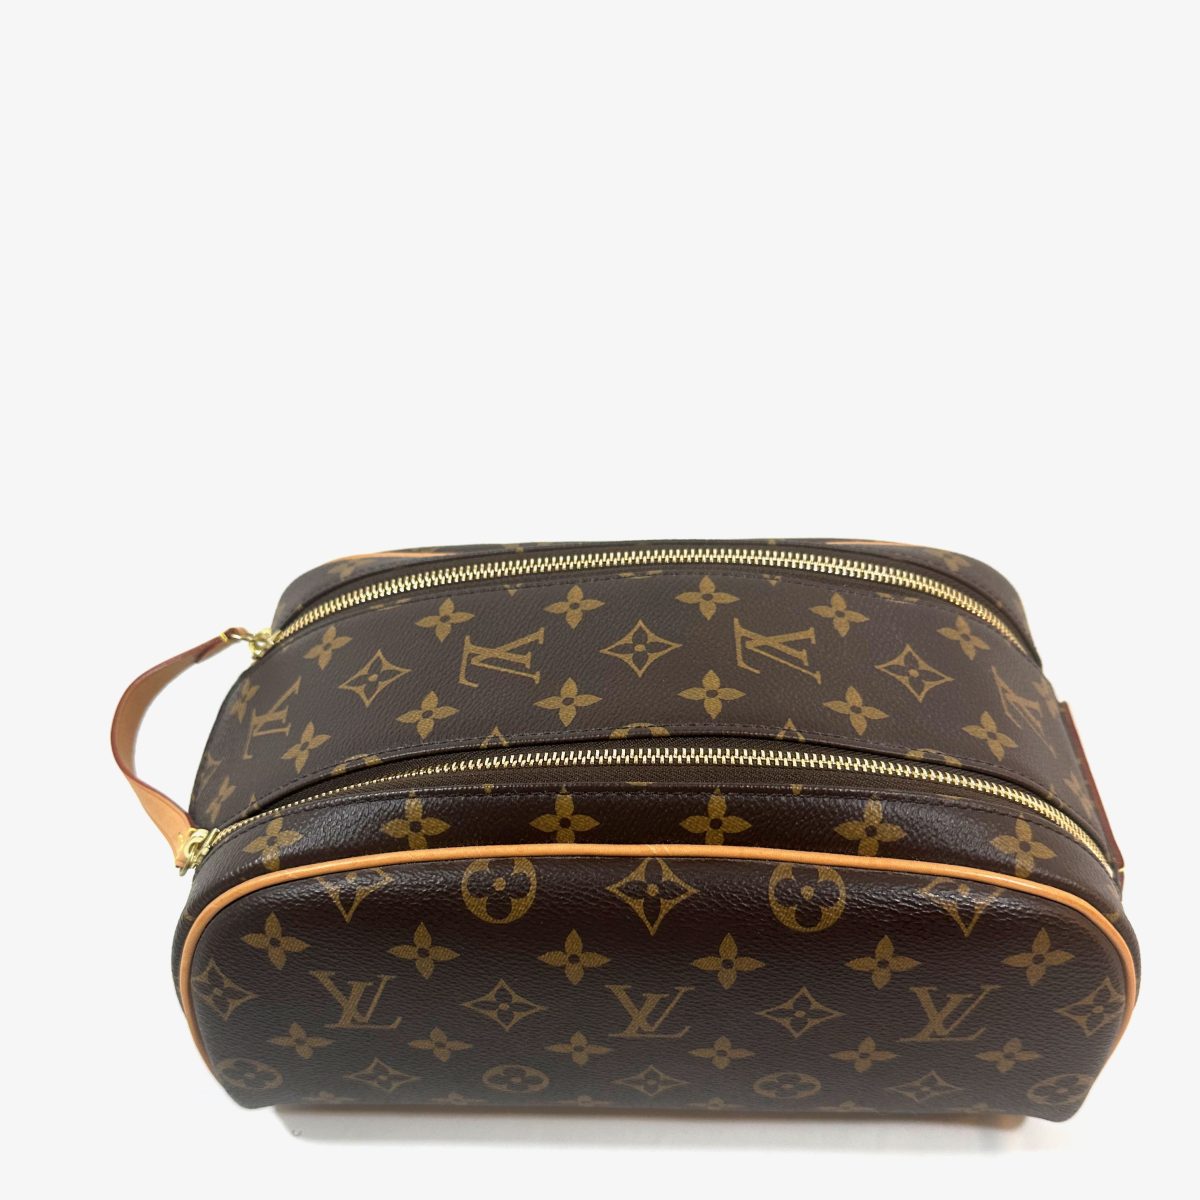 Louis Vuitton pre-loved bags